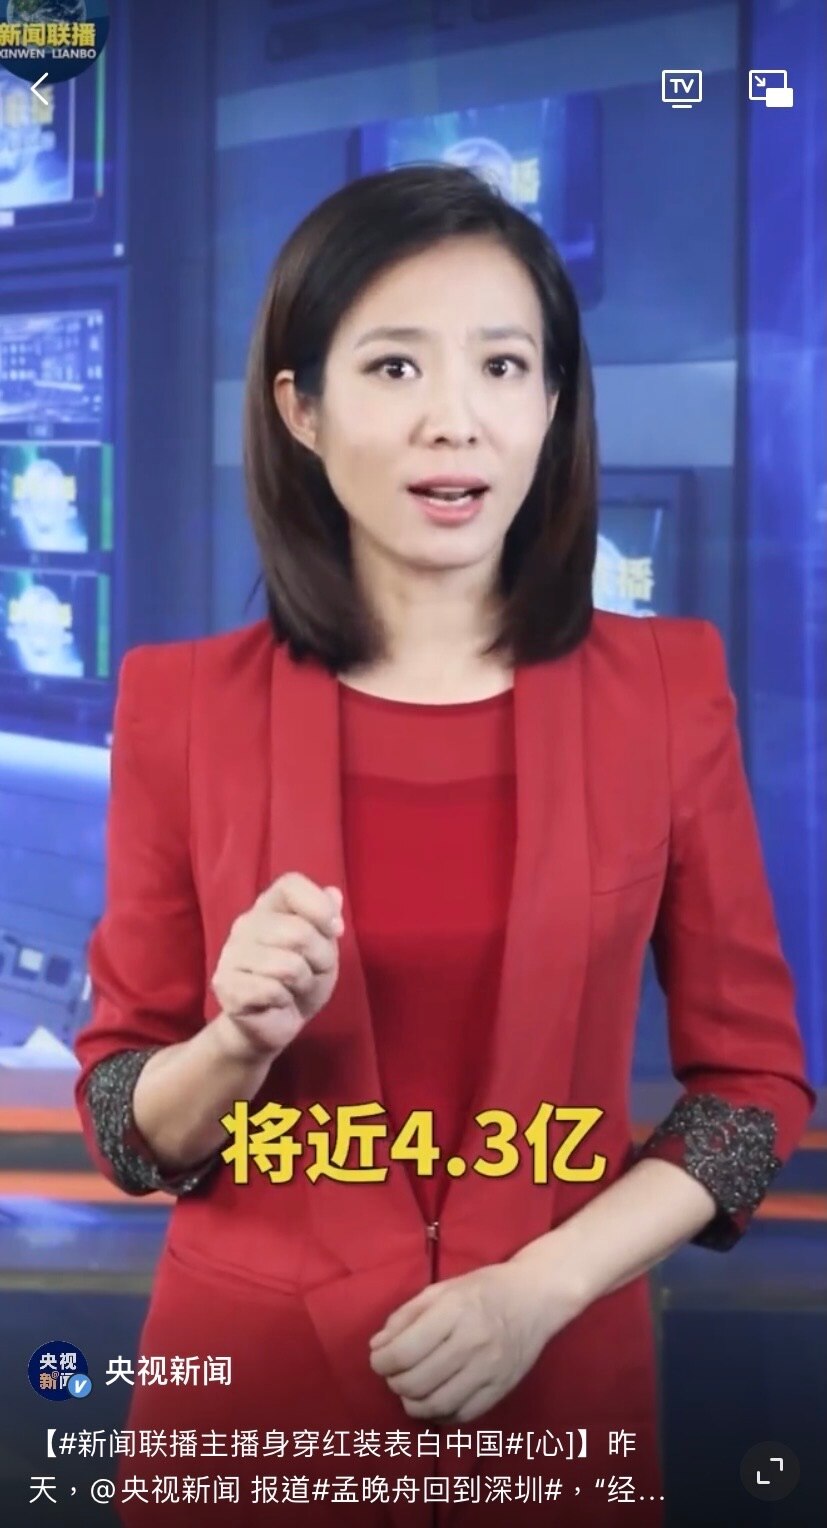 A female news anchor speaking in a screenshot video.